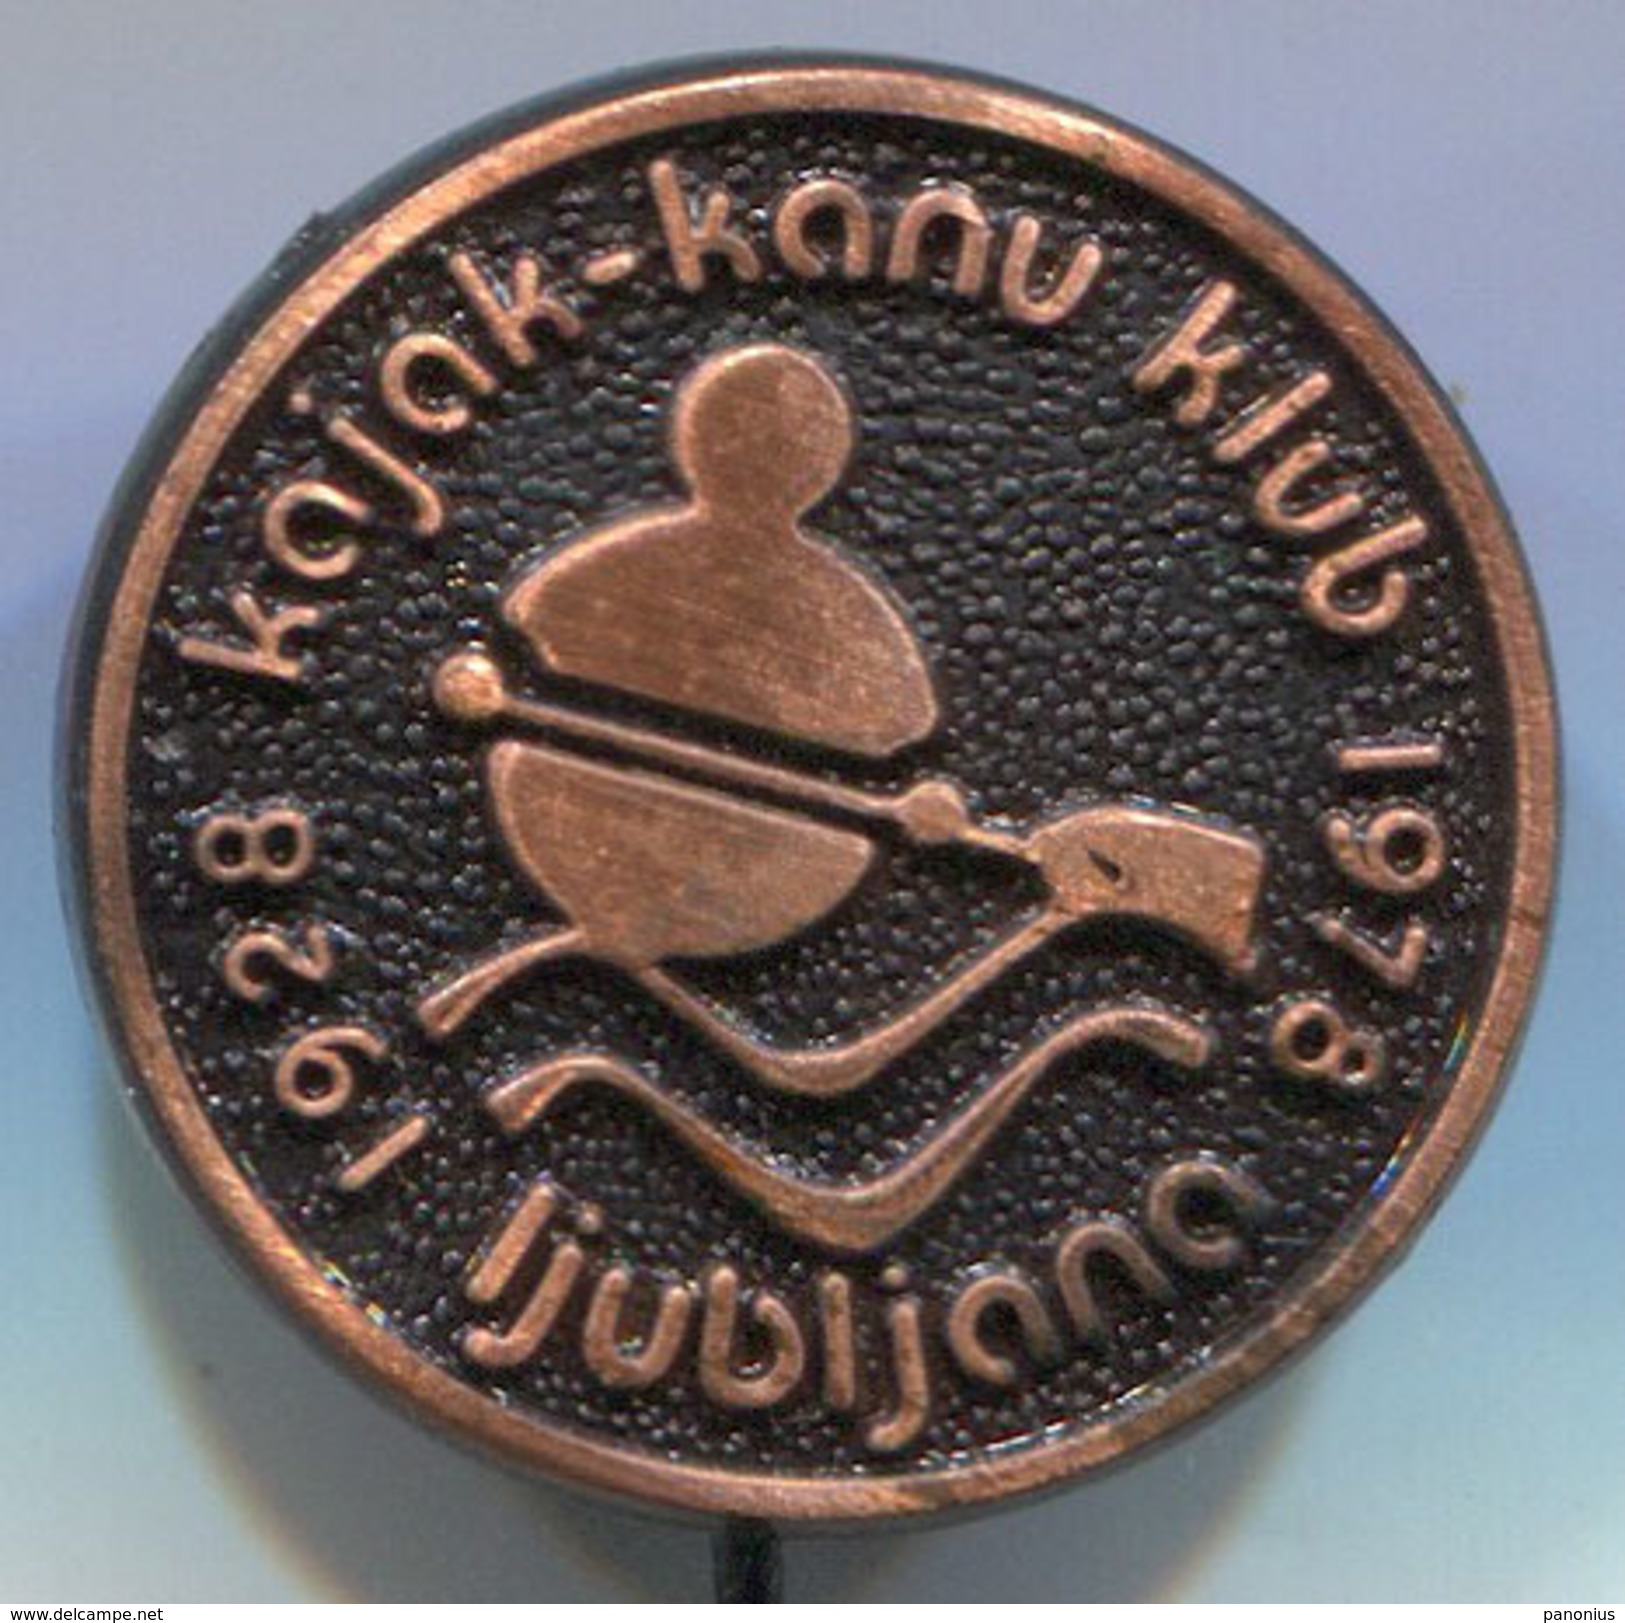 Rowing, Rudern, Canu, Kayak - Club LJUBLJANA, Slovenia, Vintage Pin, Badge, Abzeichen - Aviron